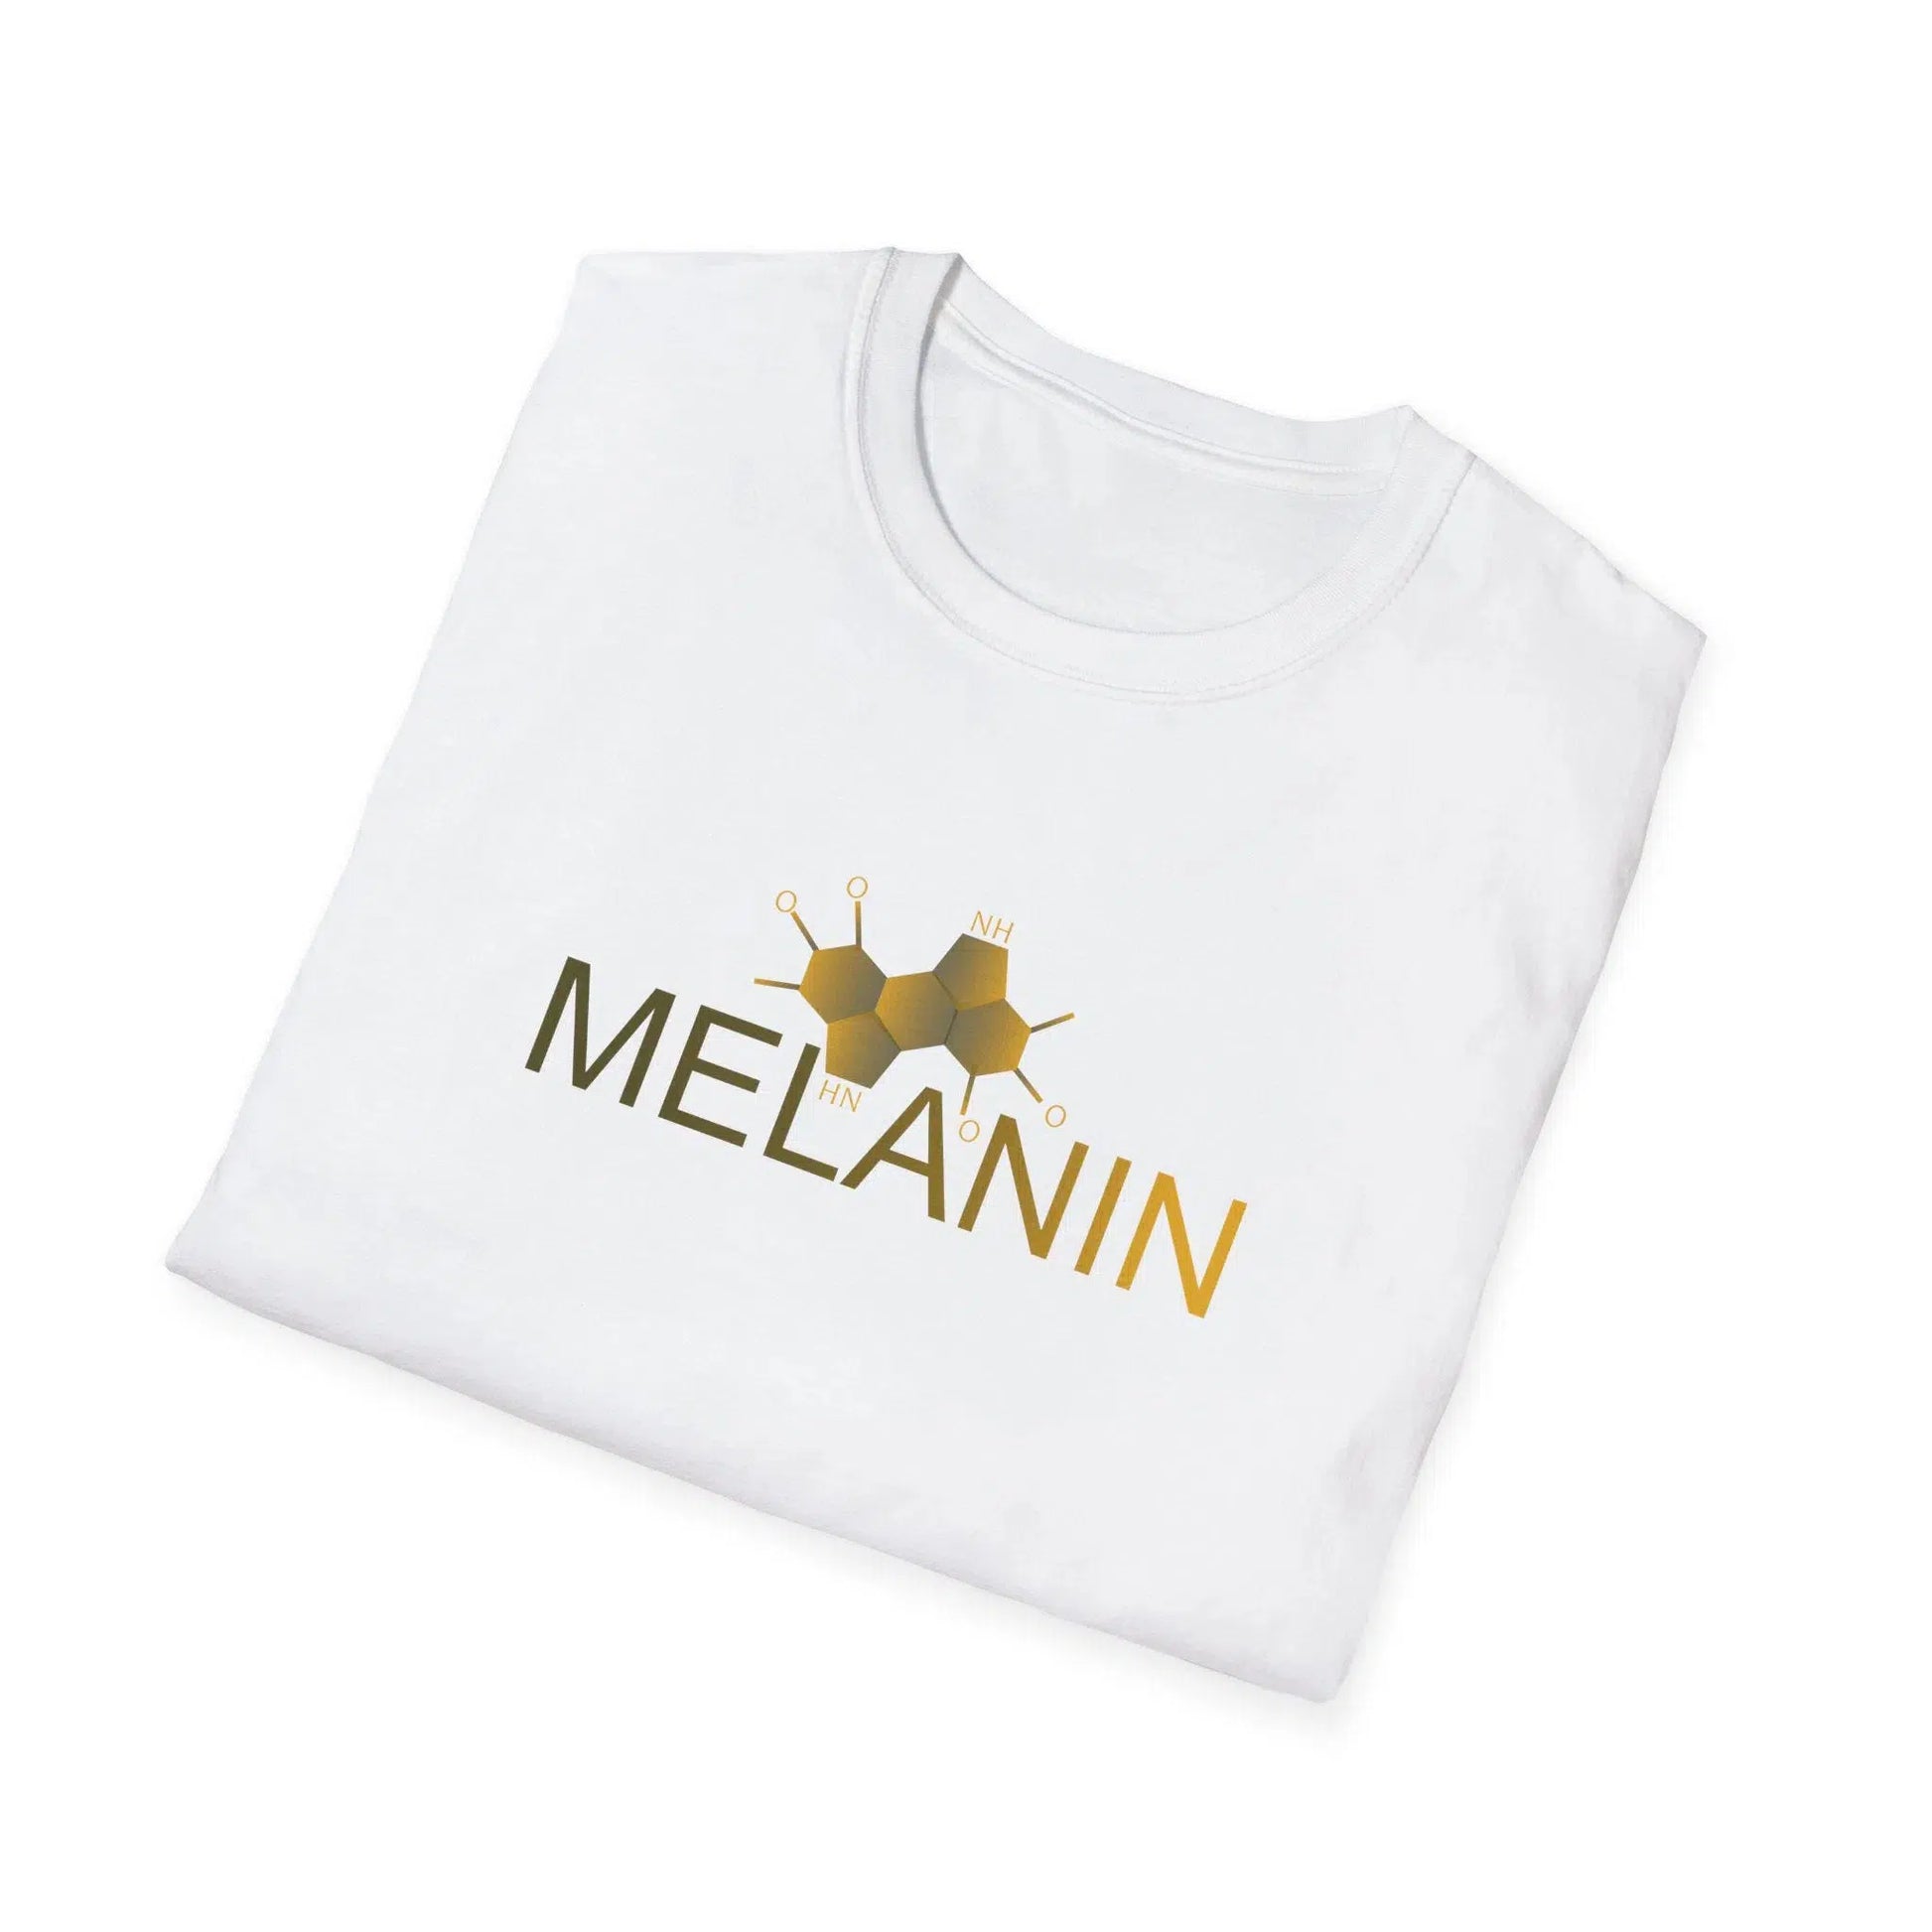 Melanin t shirt